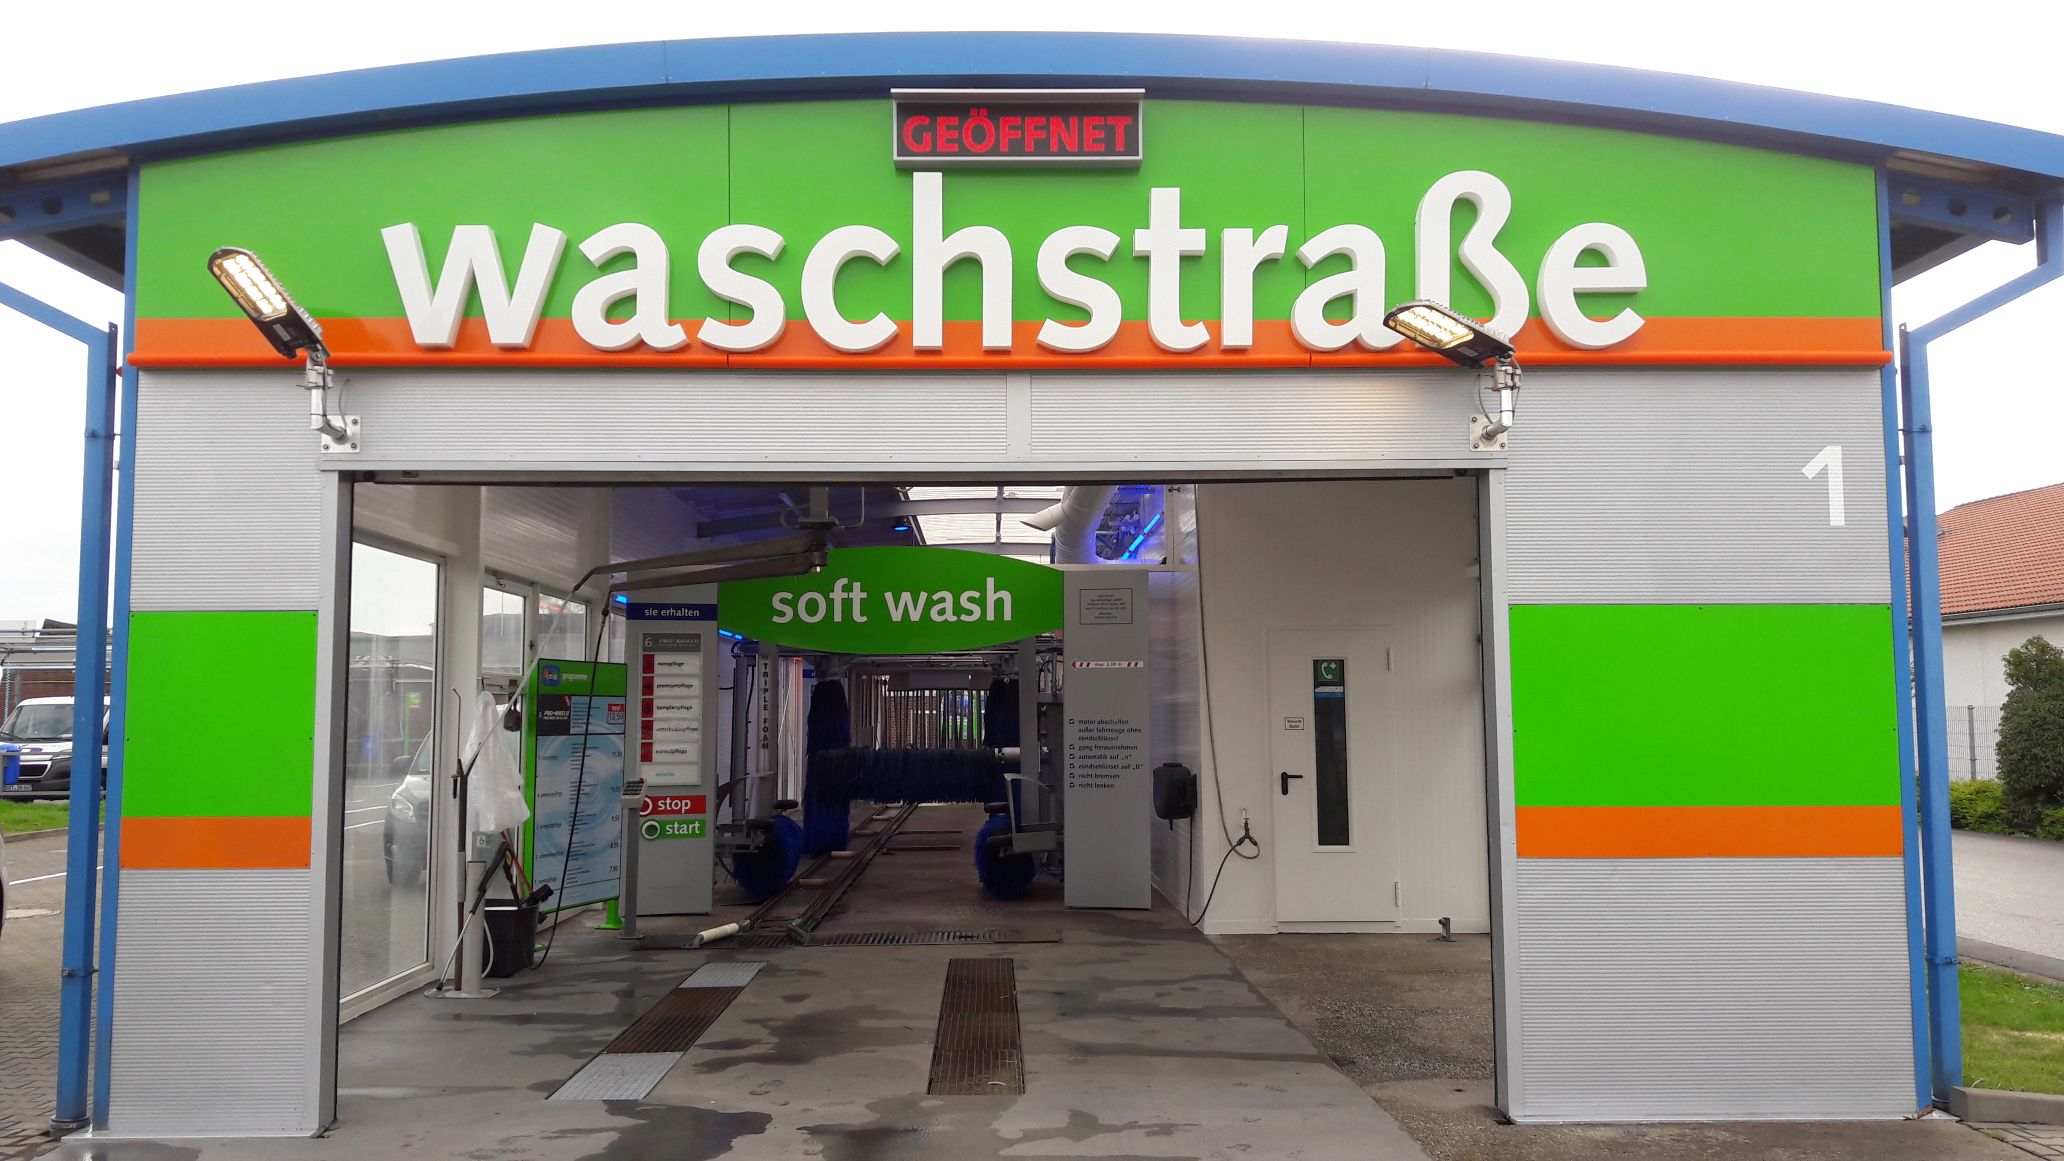 IMO Car Wash, Ostring 1 in Tönisvorst